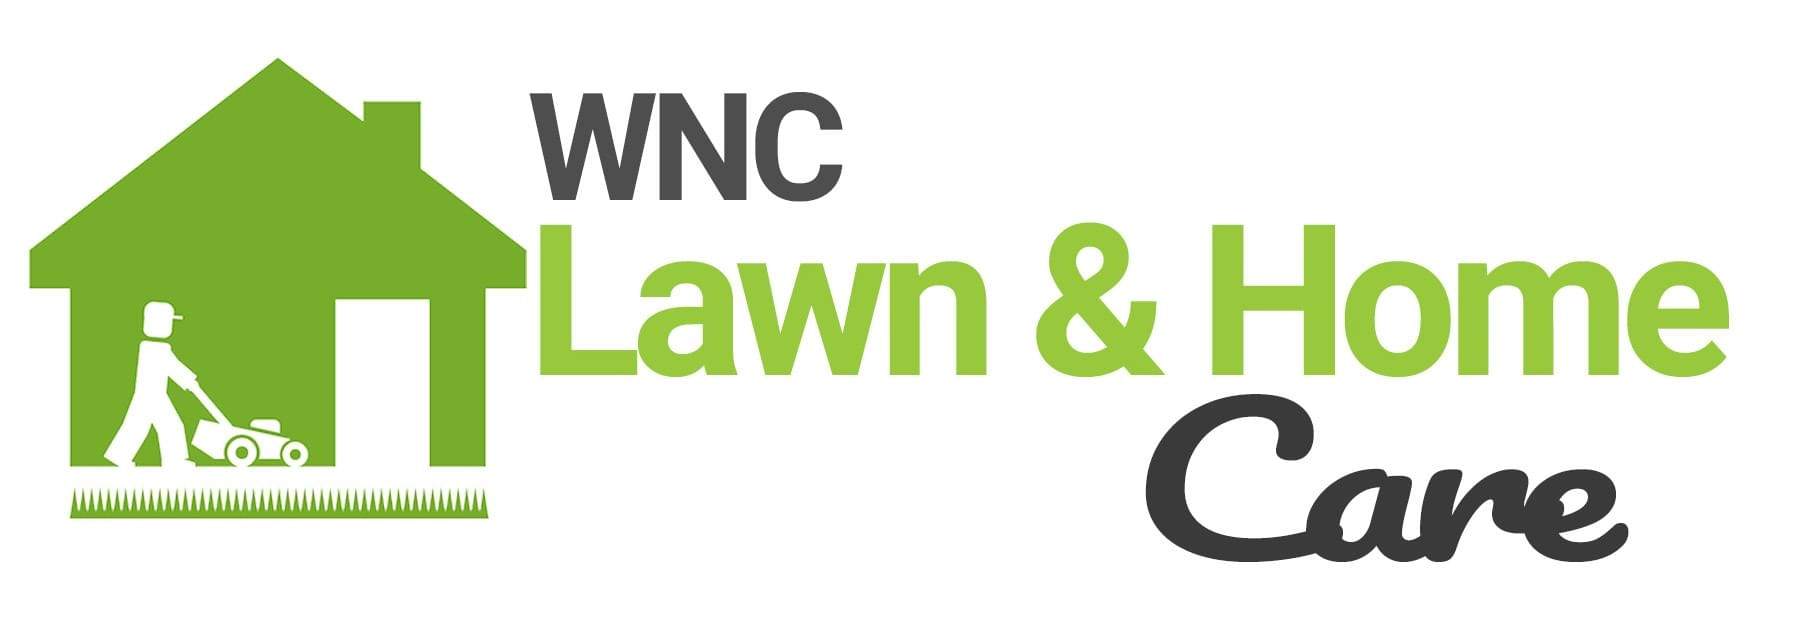 WNC Lawn & Home Care Logo